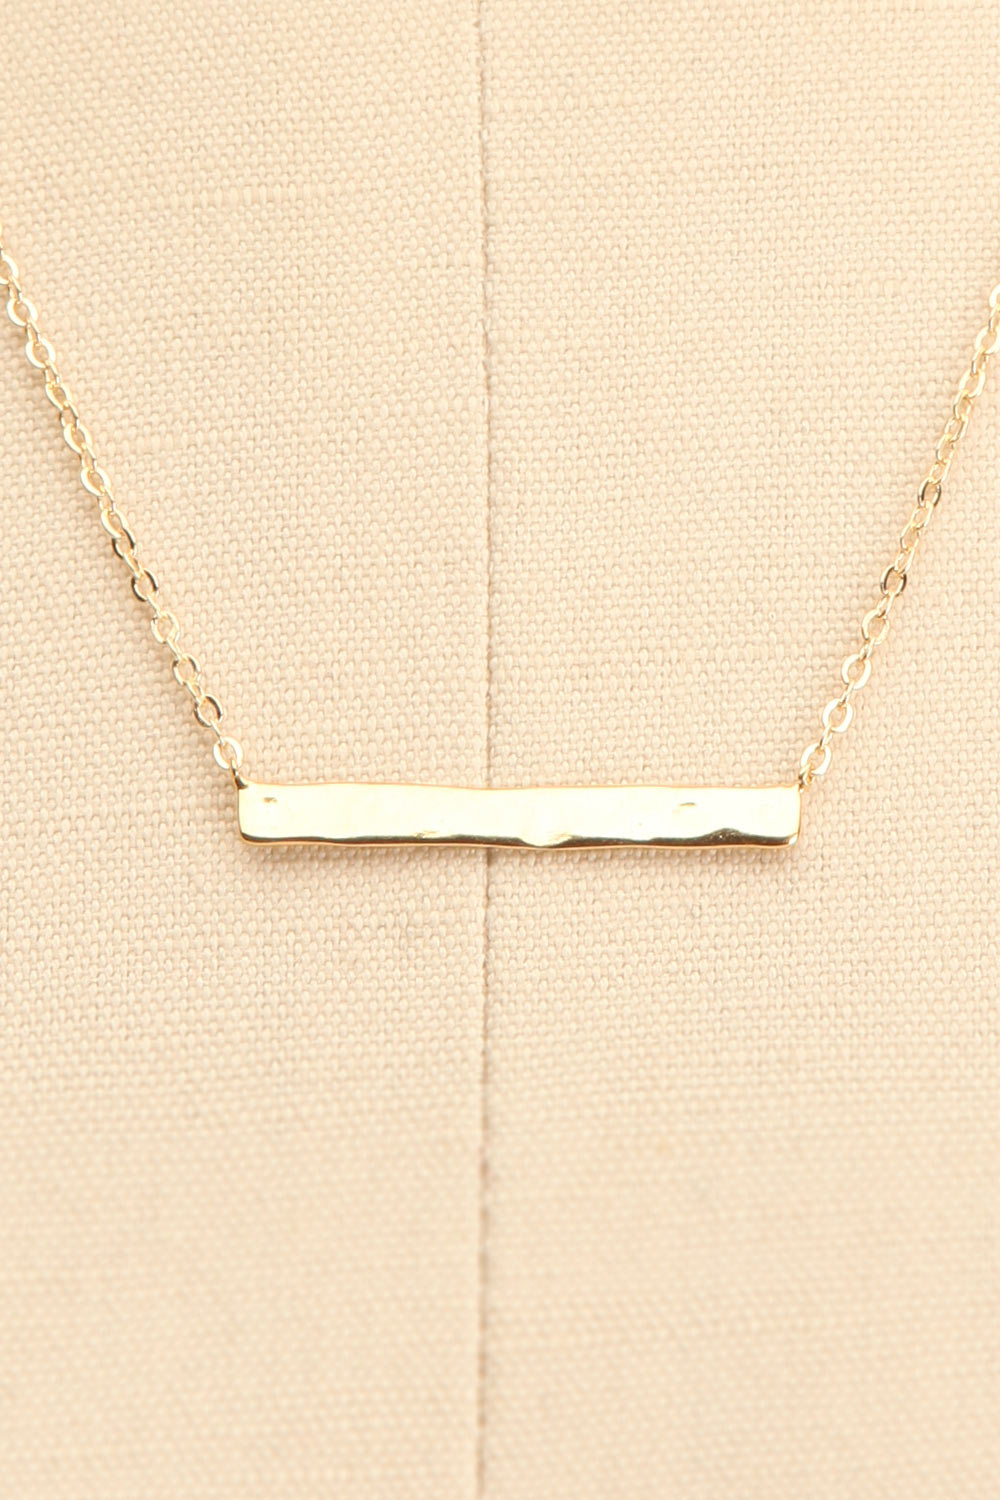 Pinson des Arbres Gold Necklace with Pendant | Boutique 1861 on mannequin close-up